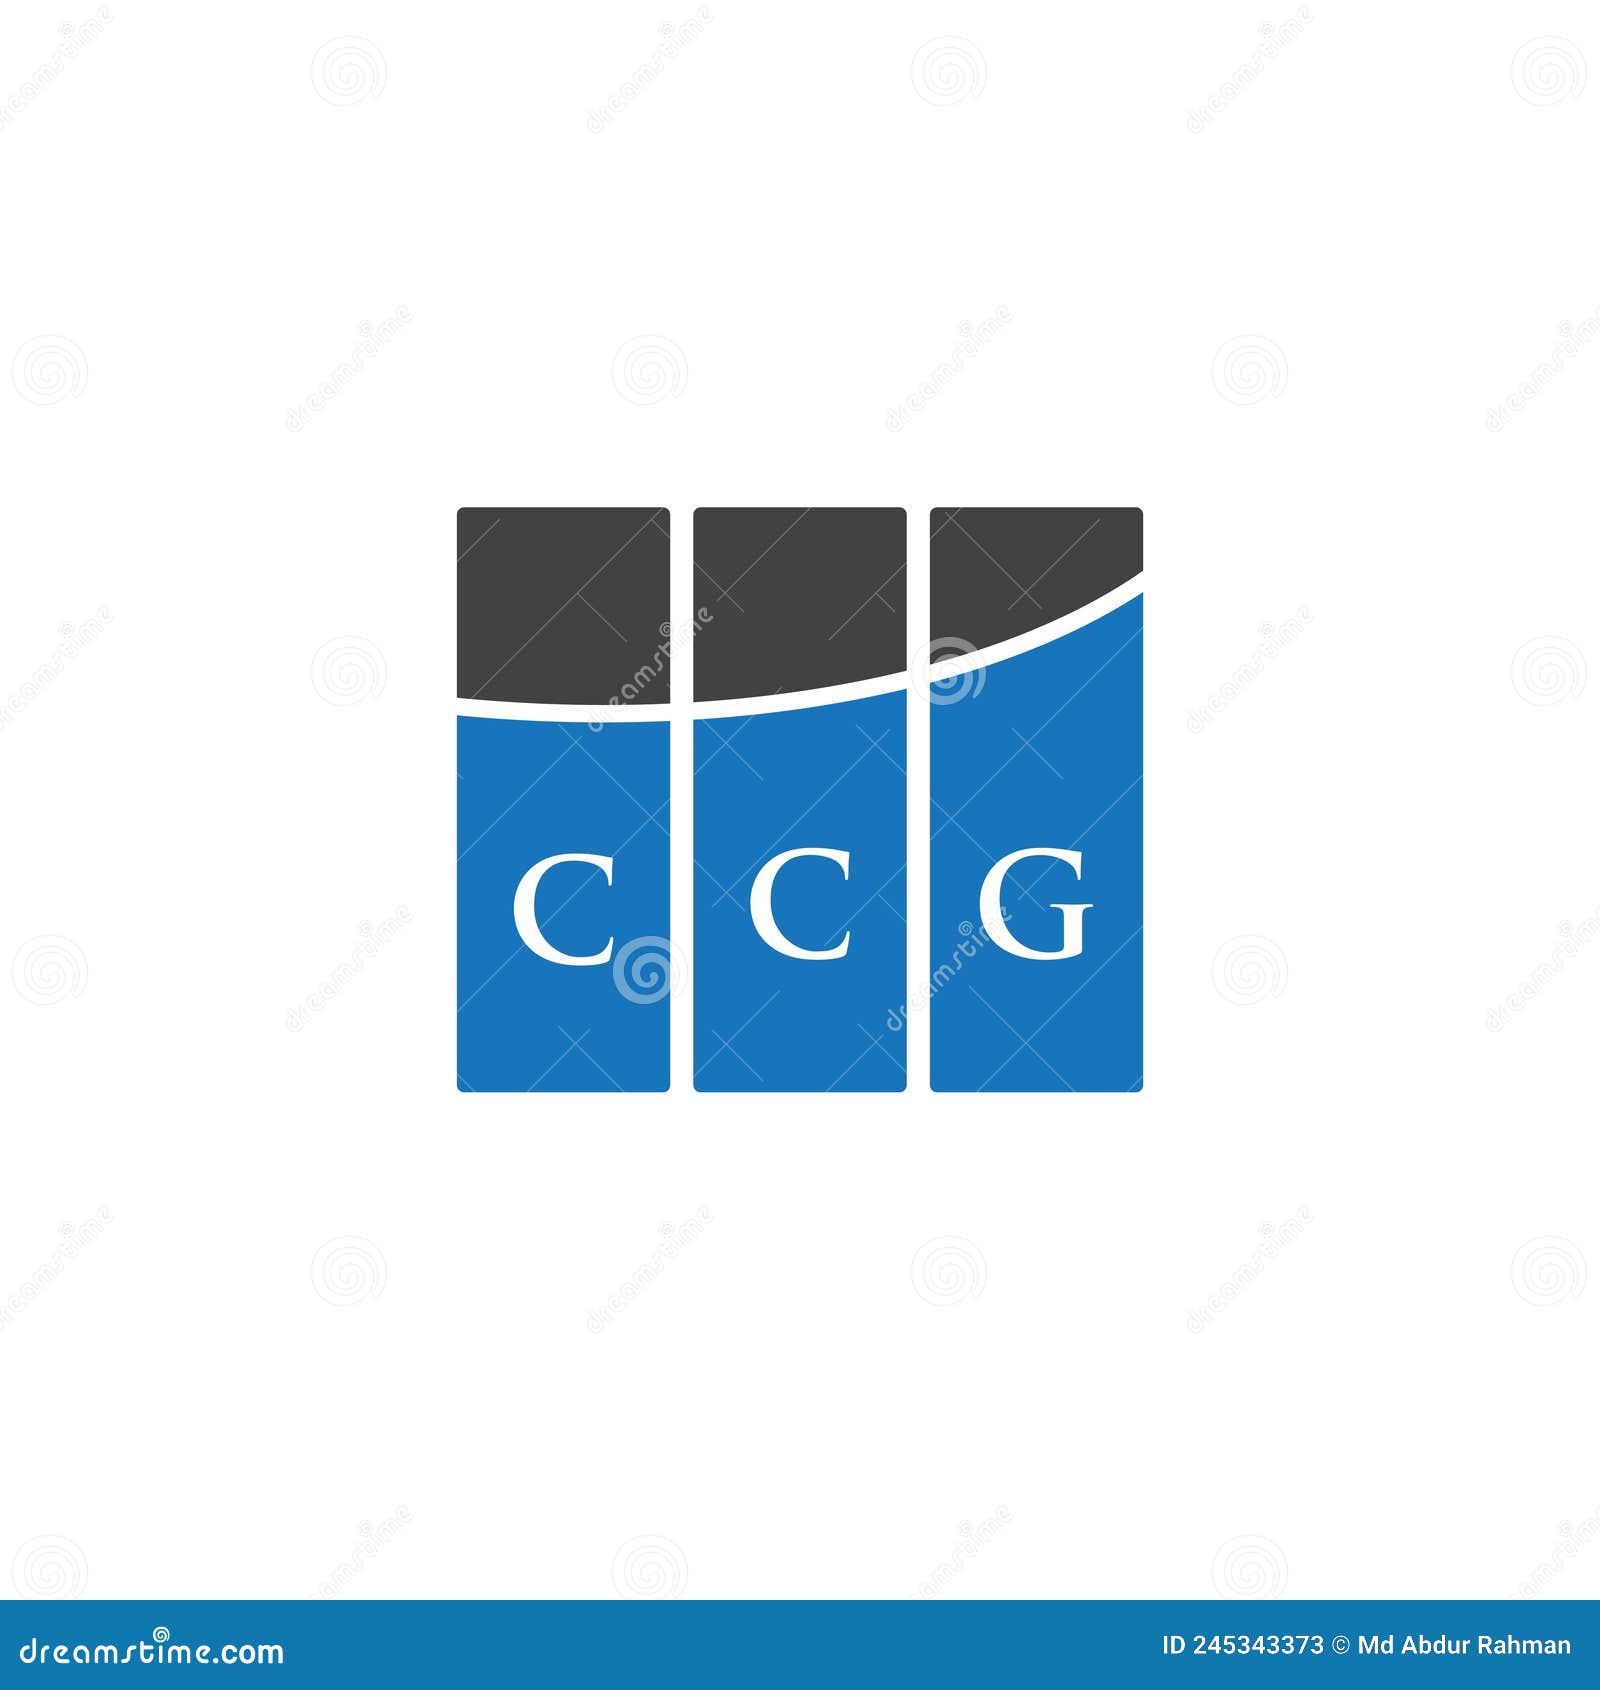 ccg letter logo  on black background. ccg creative initials letter logo concept. ccg letter 